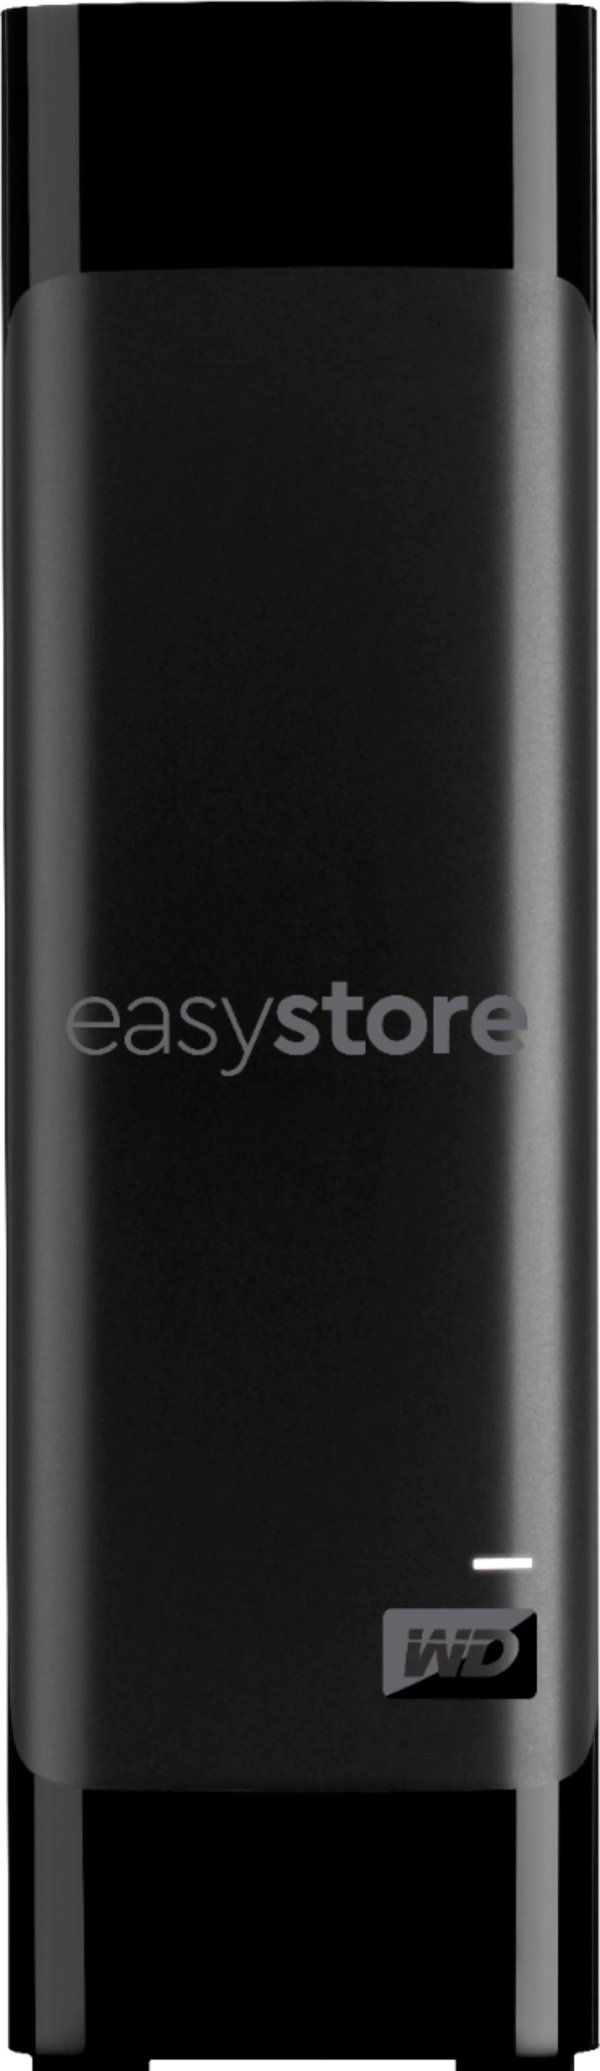 WD easystore 14TB External USB 3.0 Hard Drive